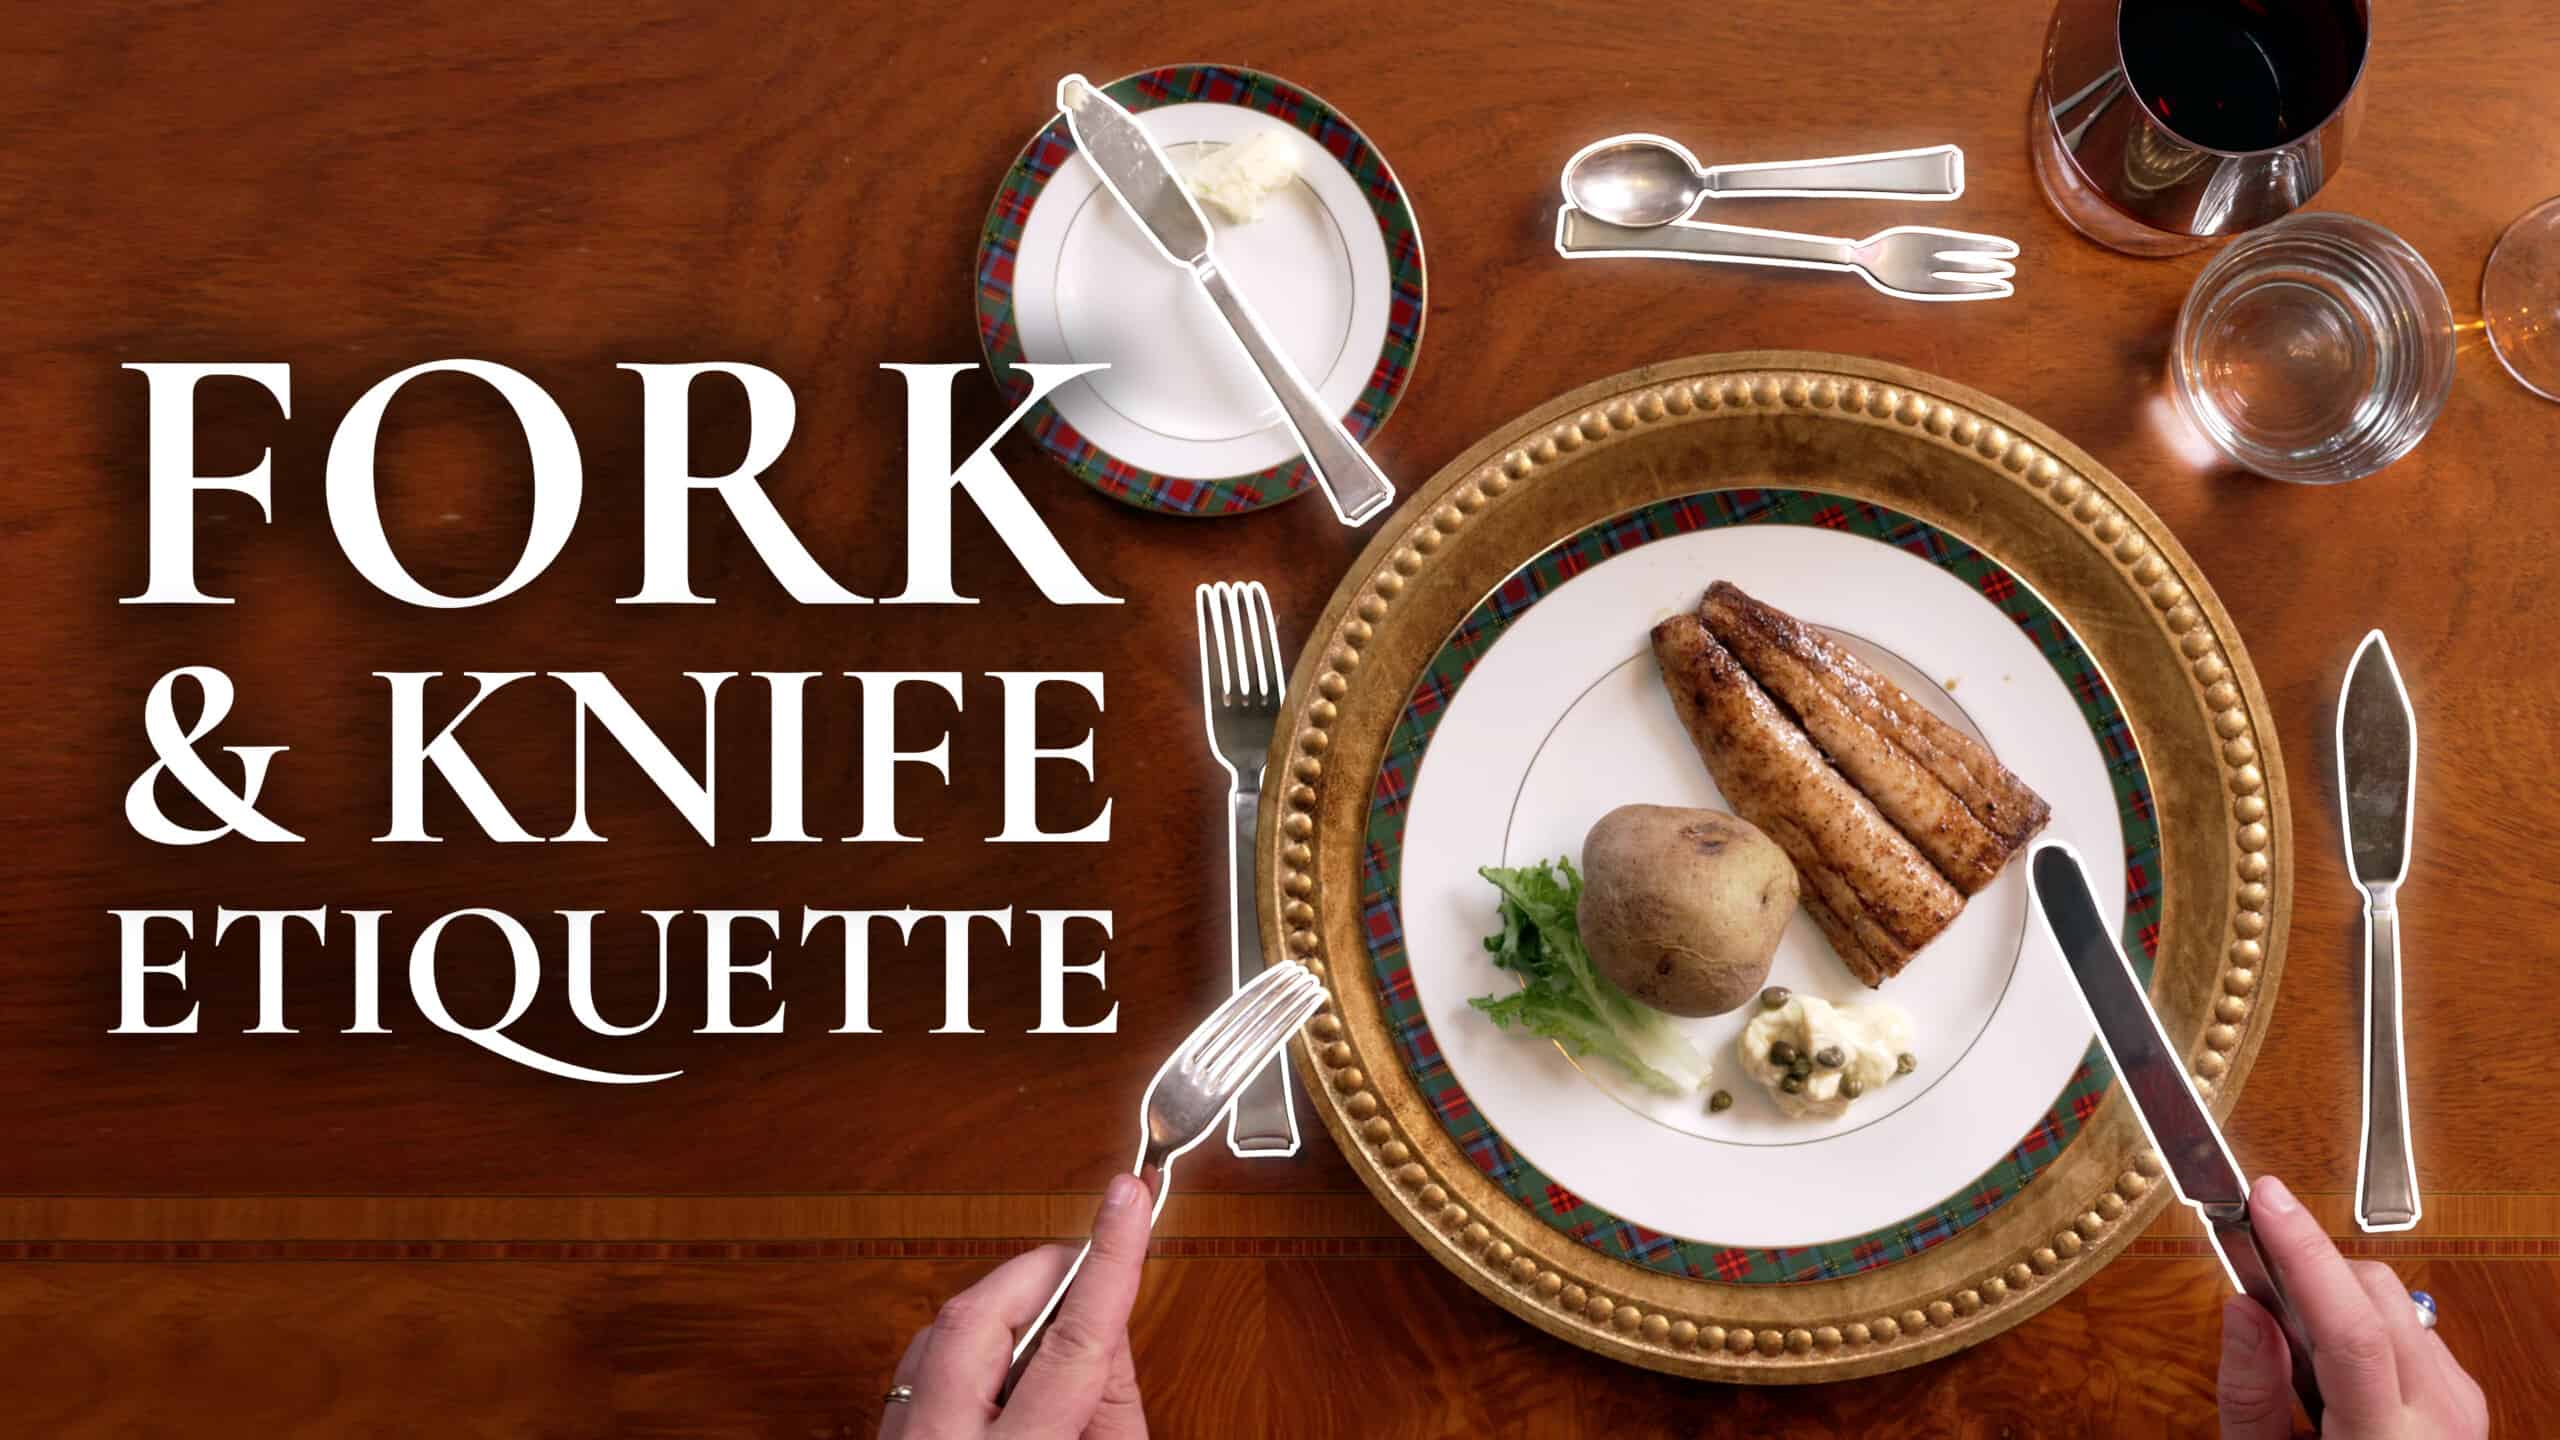 https://www.gentlemansgazette.com/wp-content/uploads/2023/05/fork-knife-etiquette_3840x2160-scaled.jpg